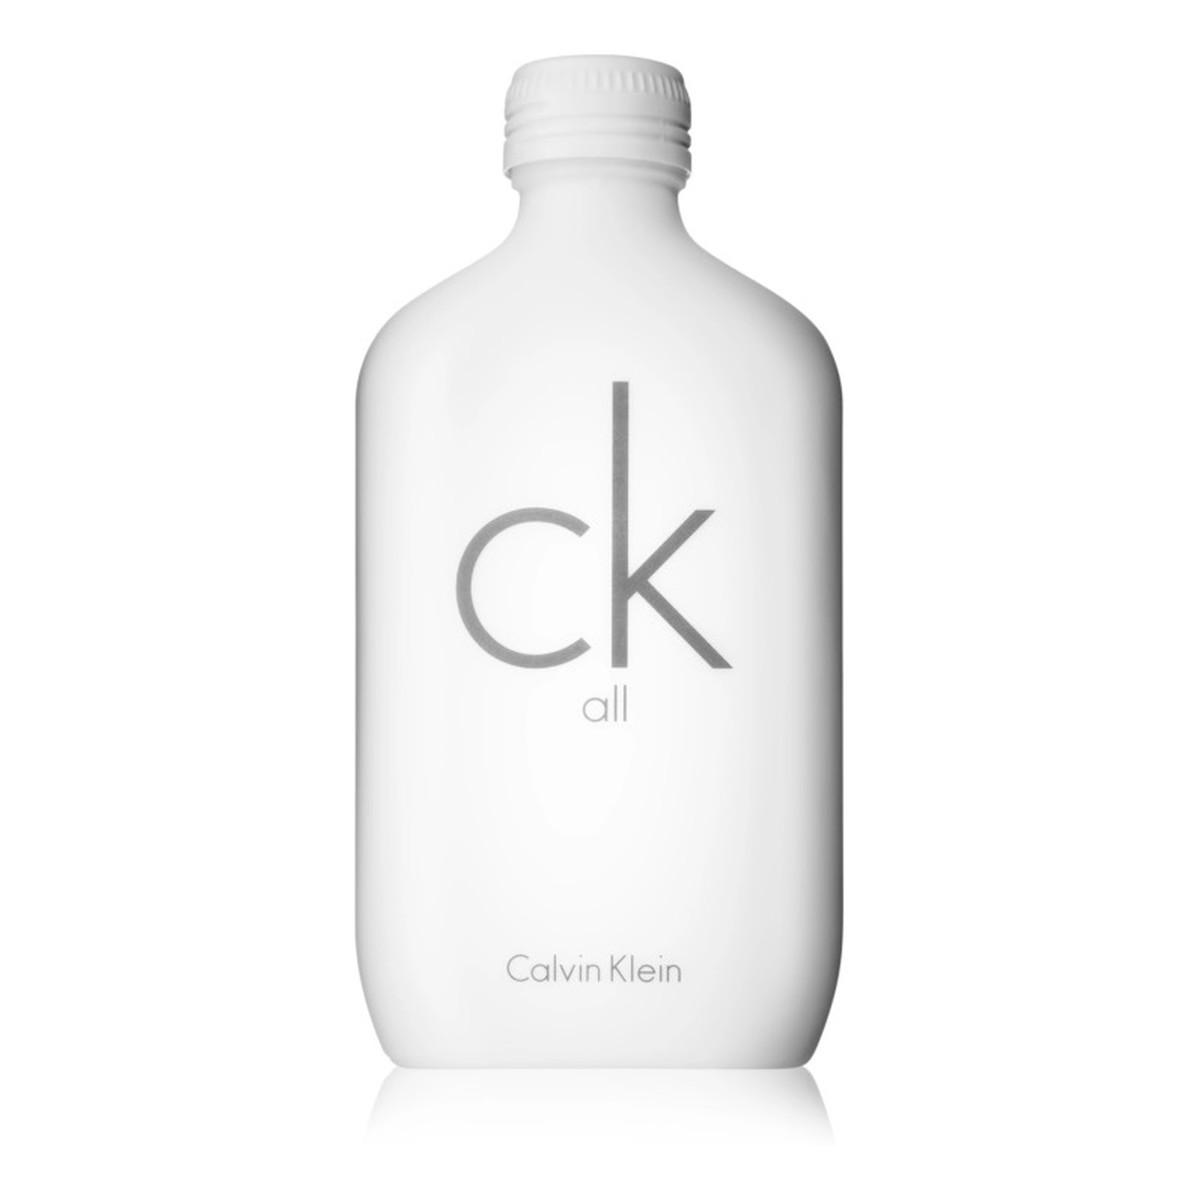 Calvin Klein CK All Woda toaletowa spray tester 100ml